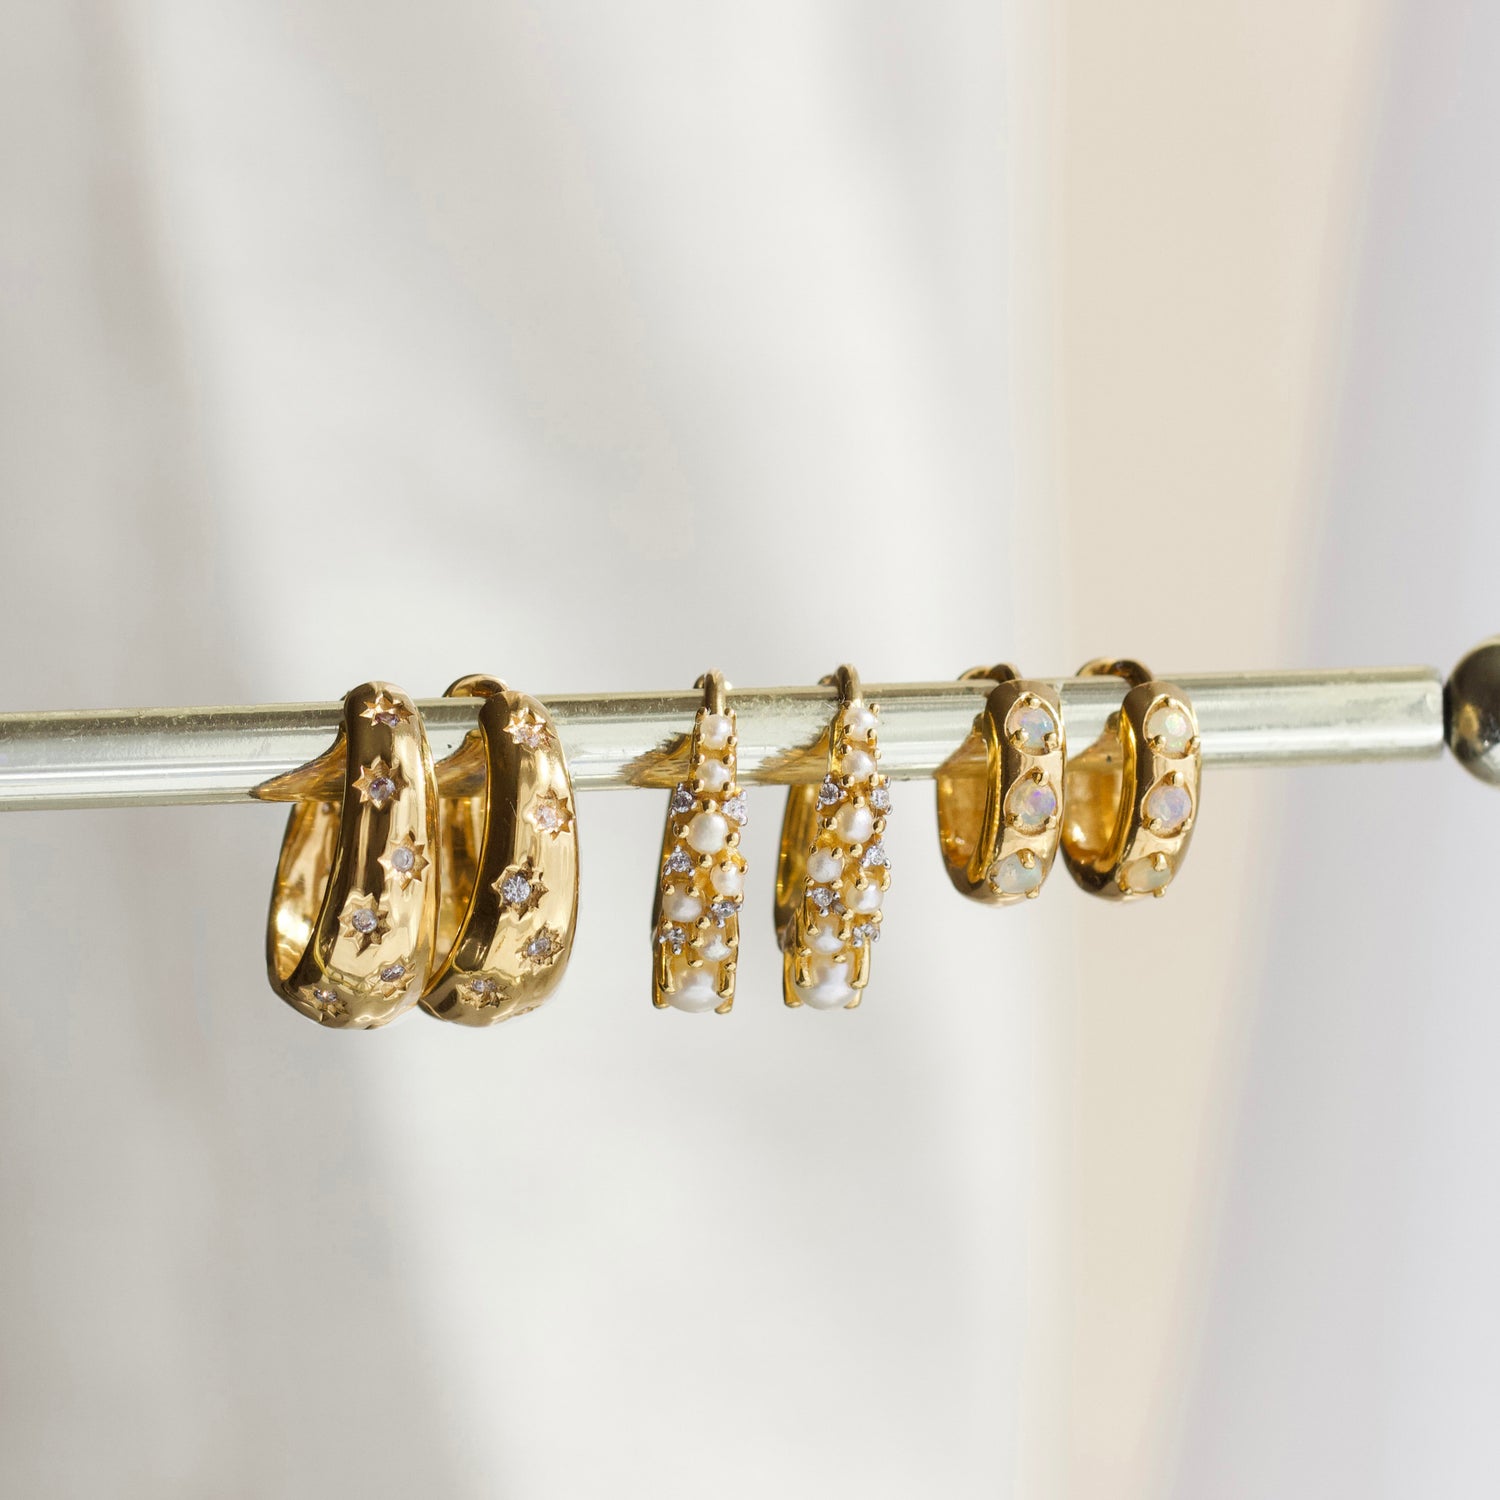 celestial cz tapered hoop earring in gold